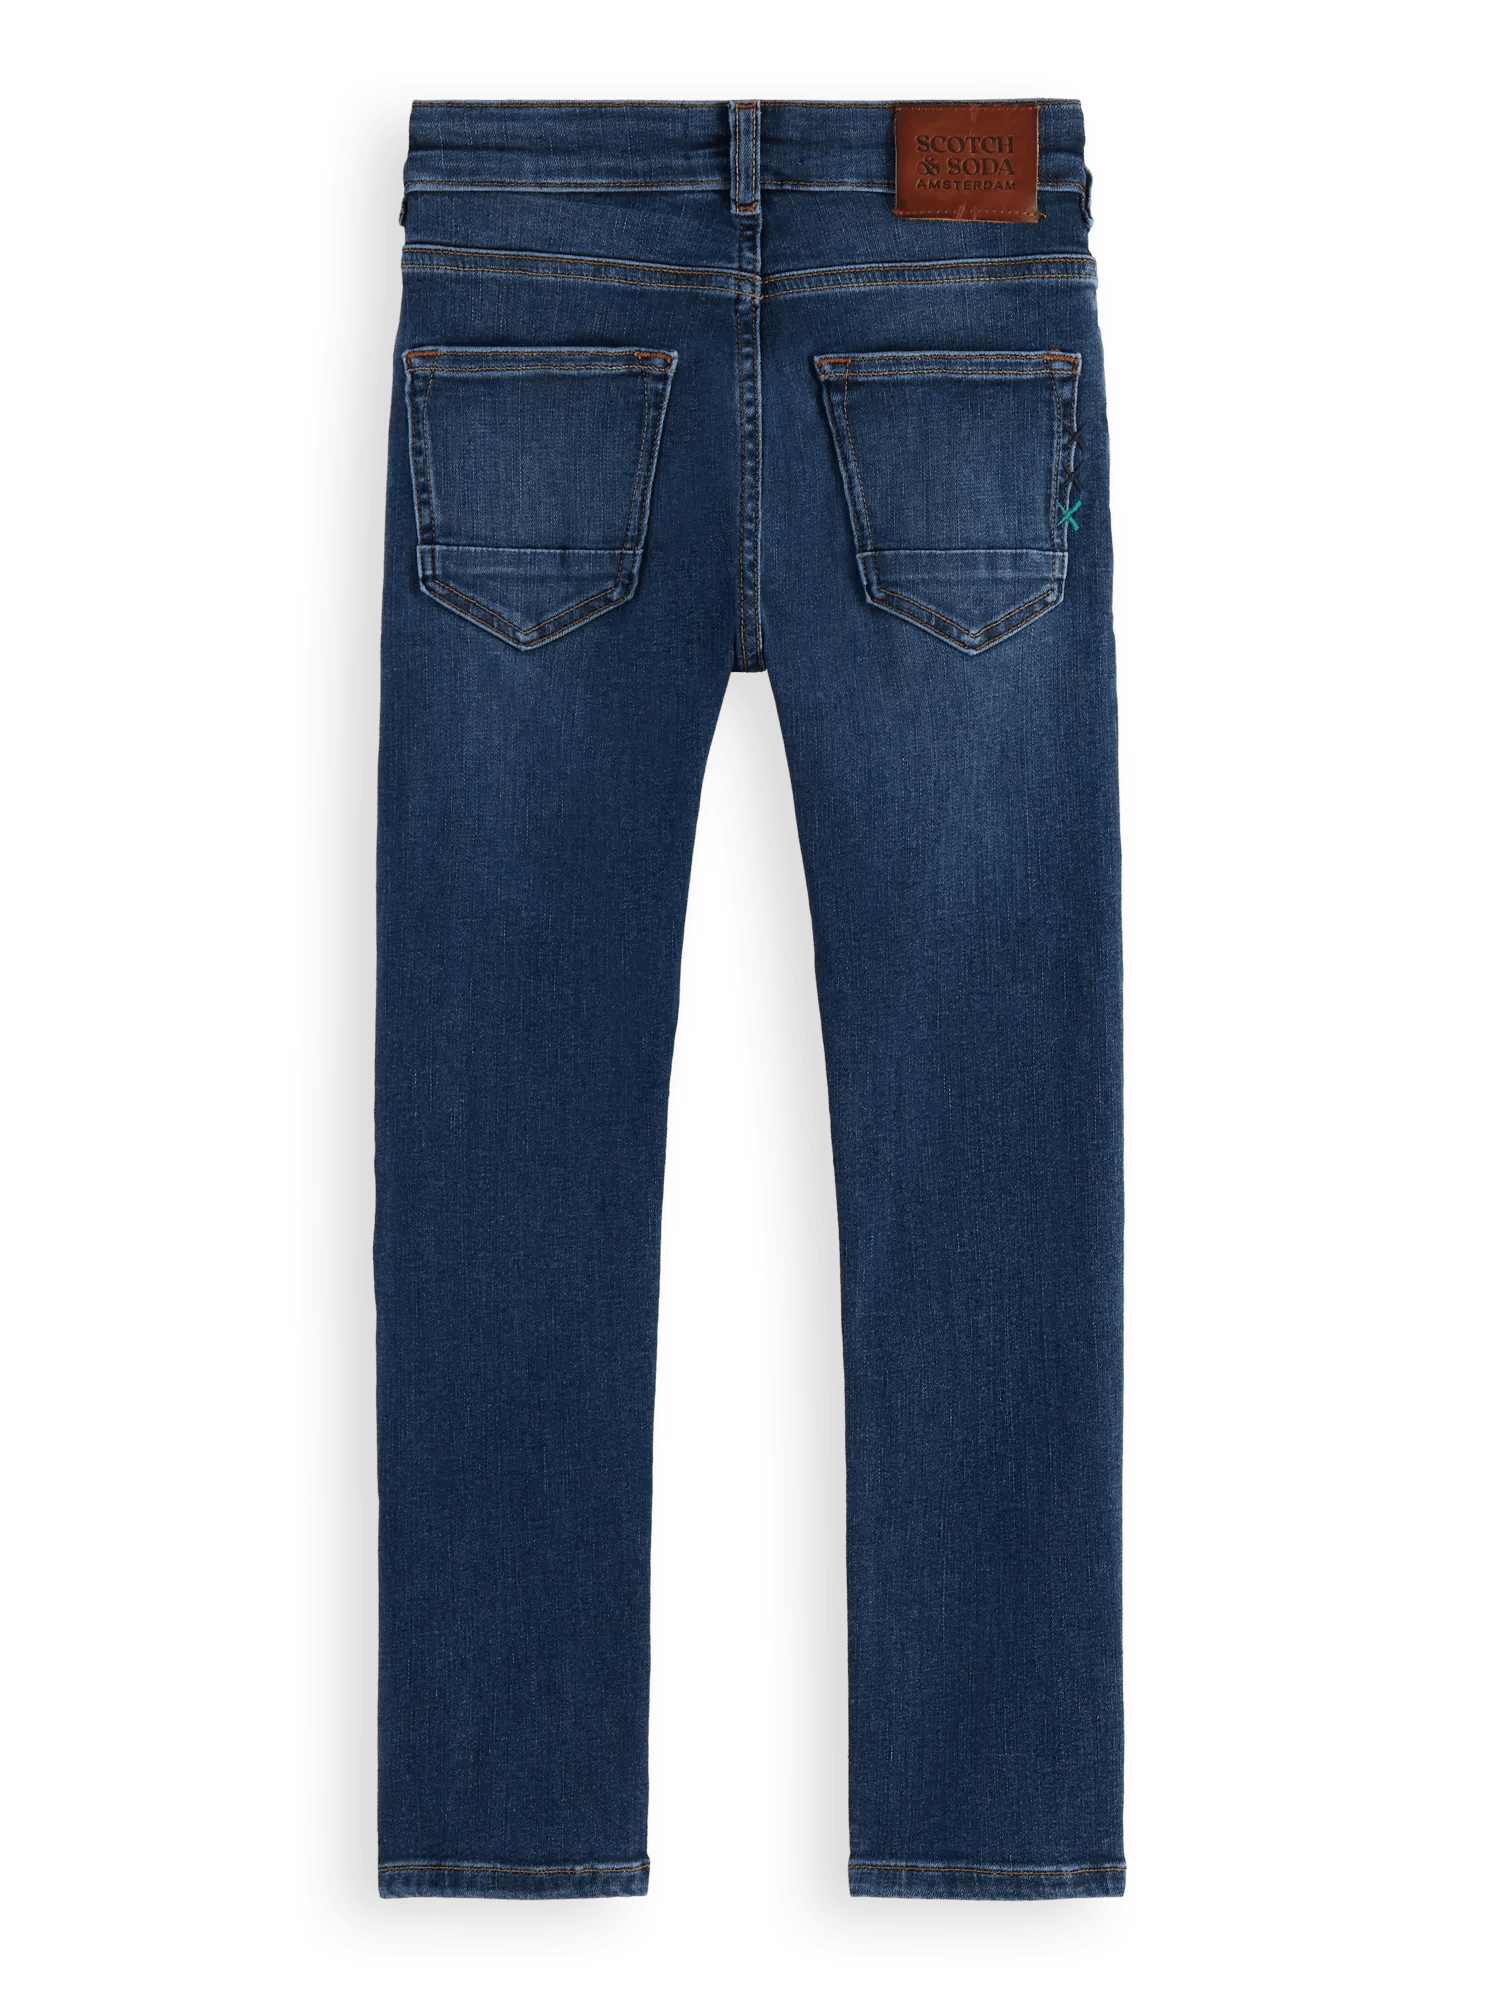 Scotch & Soda Strummer regular slim fit jeans BCK